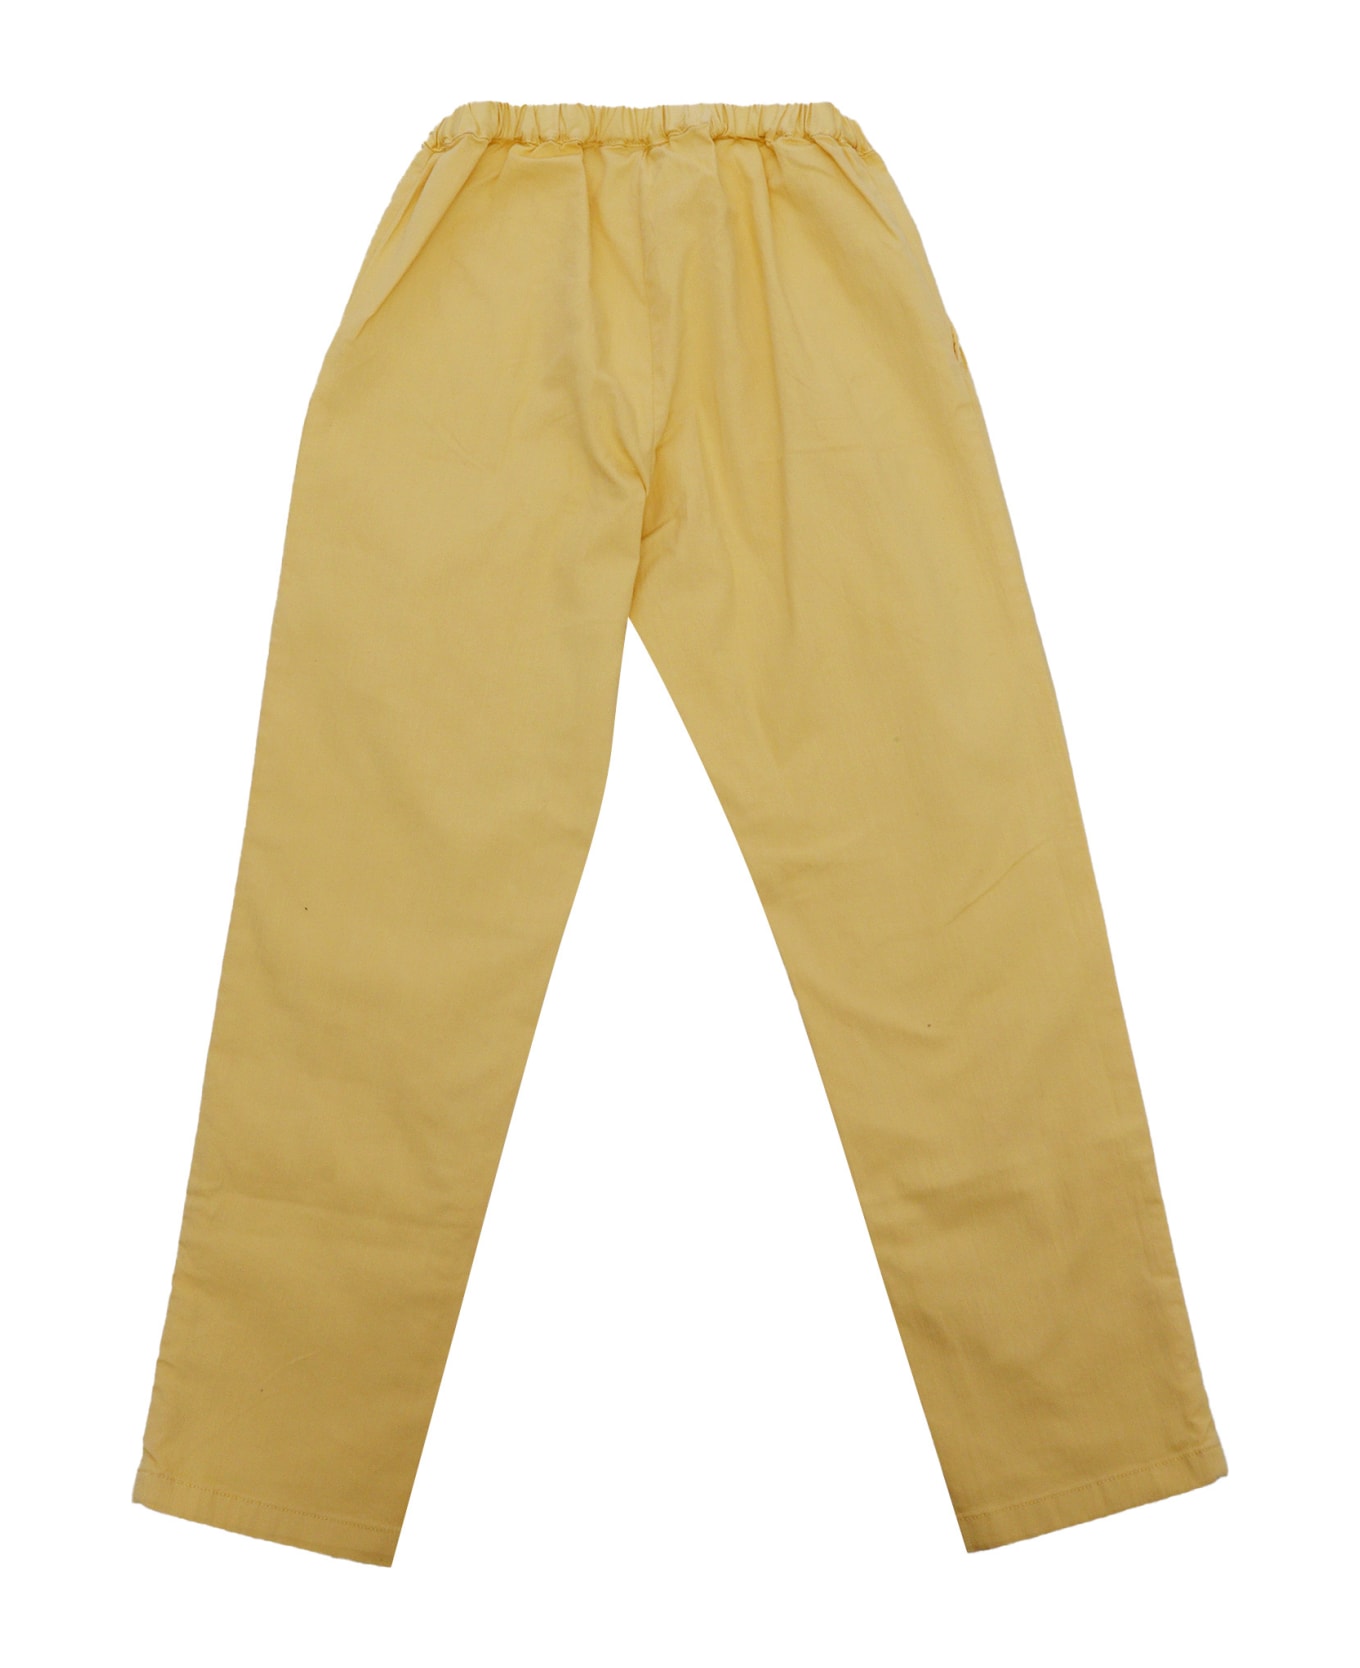 Bonpoint Yellow Callie Trousers - YELLOW